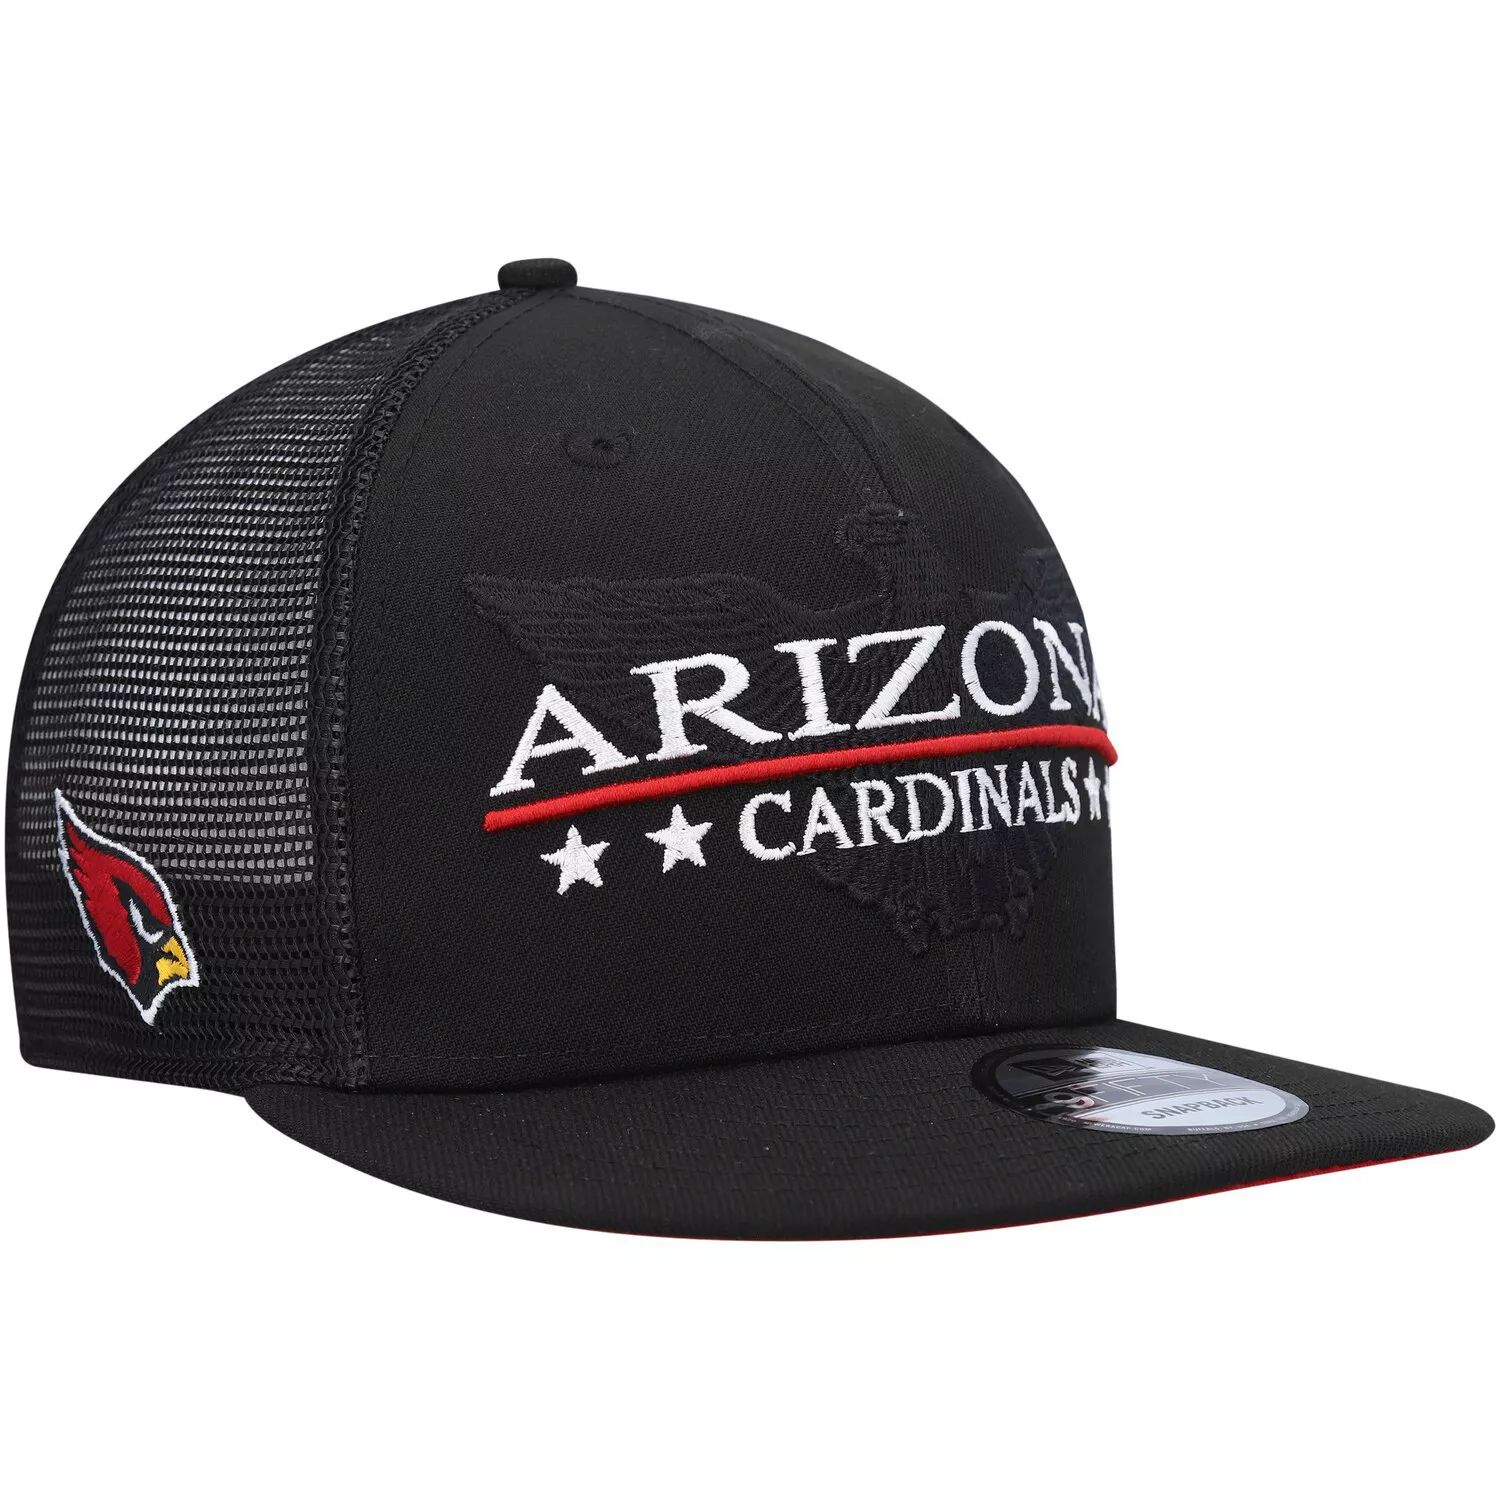 Мужская кепка New Era Black Arizona Cardinals Totem 9FIFTY Snapback